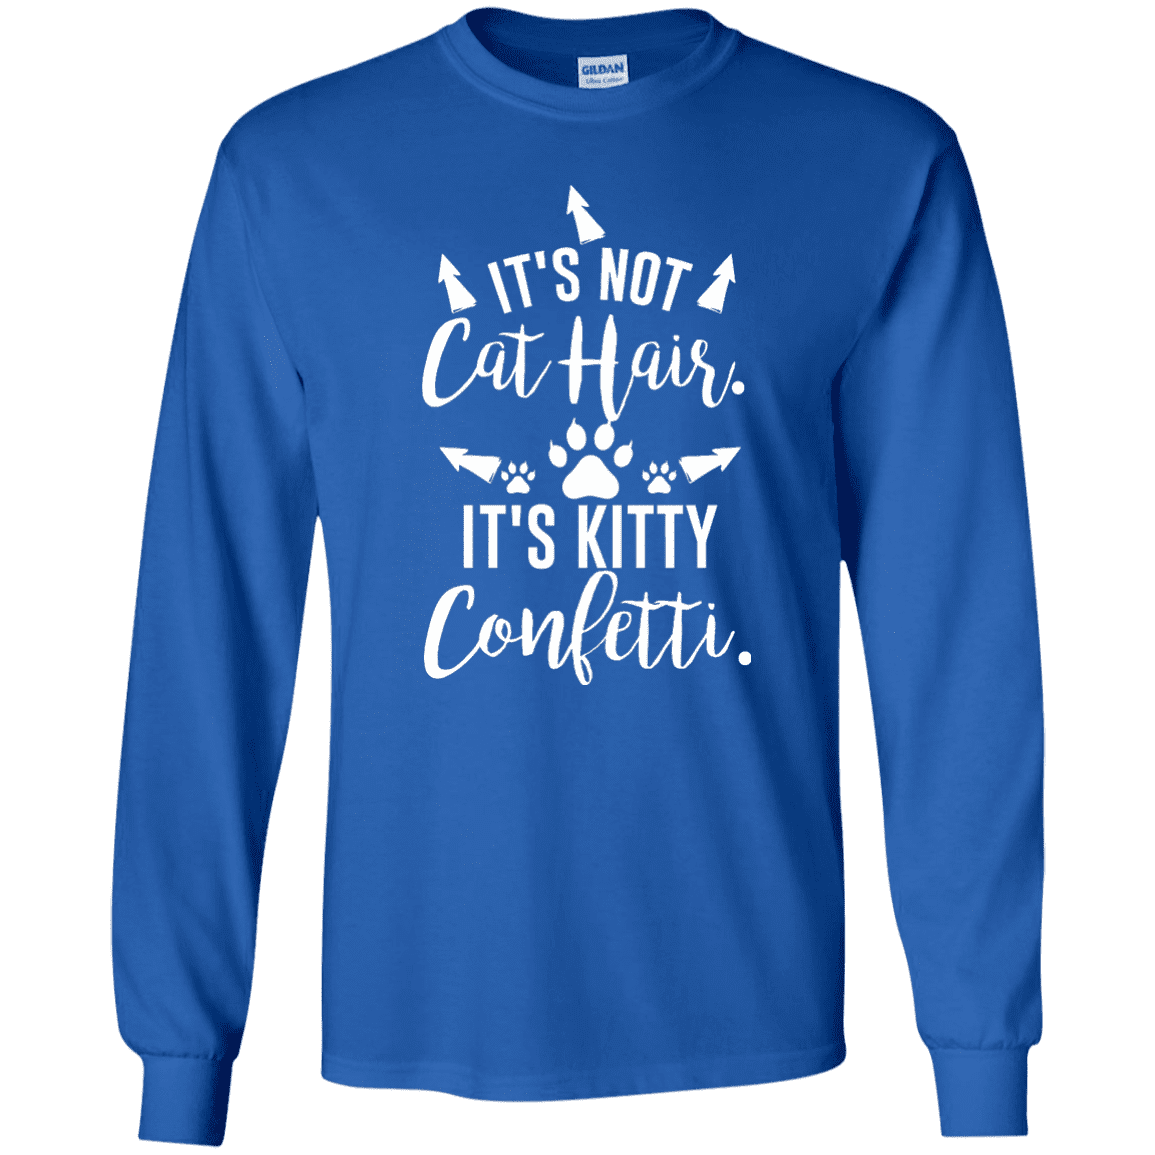 Kitty Confetti - Long Sleeve T Shirt.